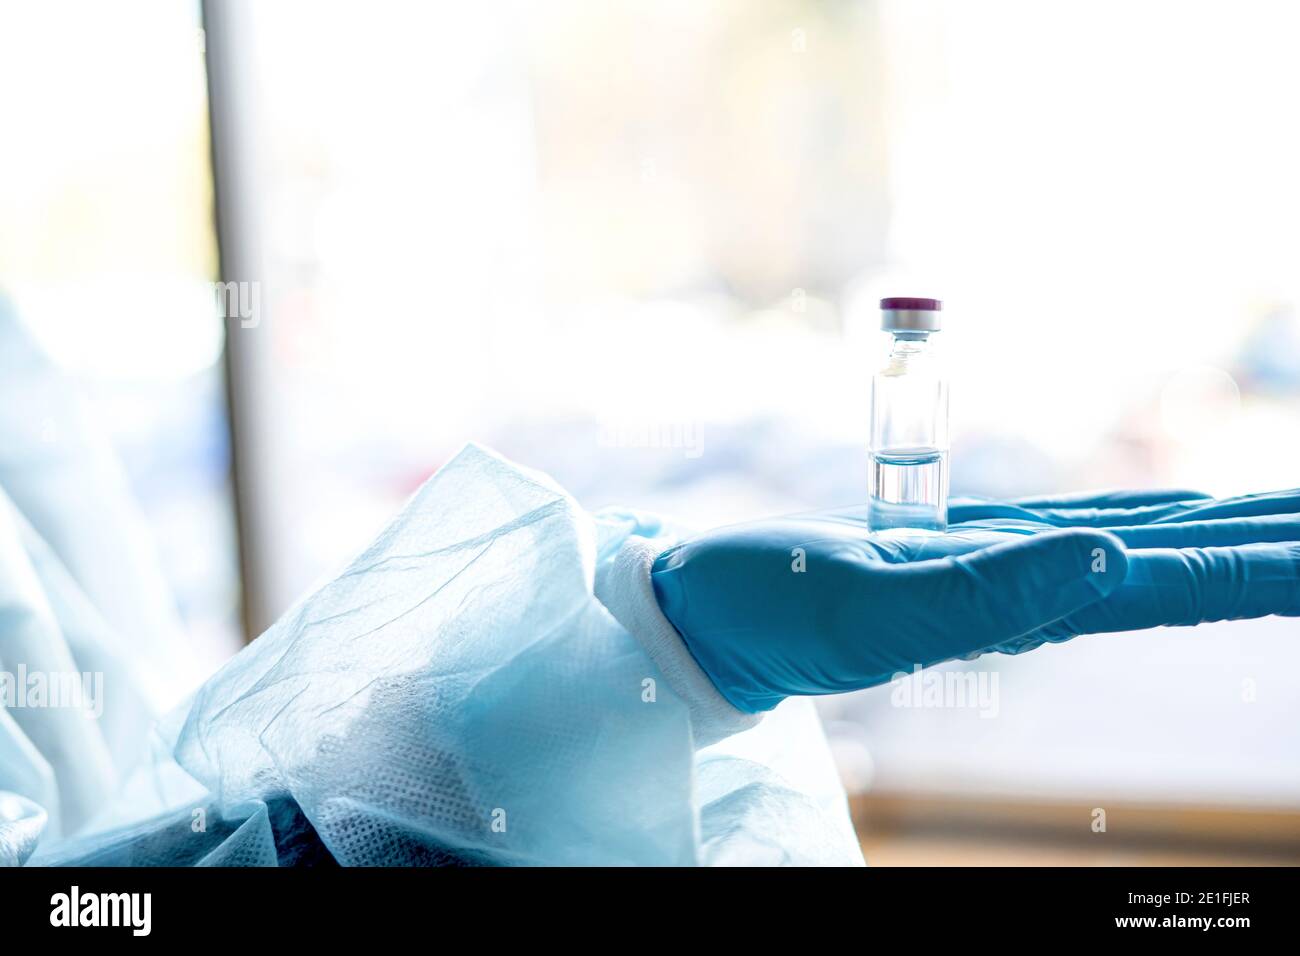 Medical doctor or laborant holding tube with nCoV Coronavirus vaccine for 2019-nCoV virus. Stock Photo